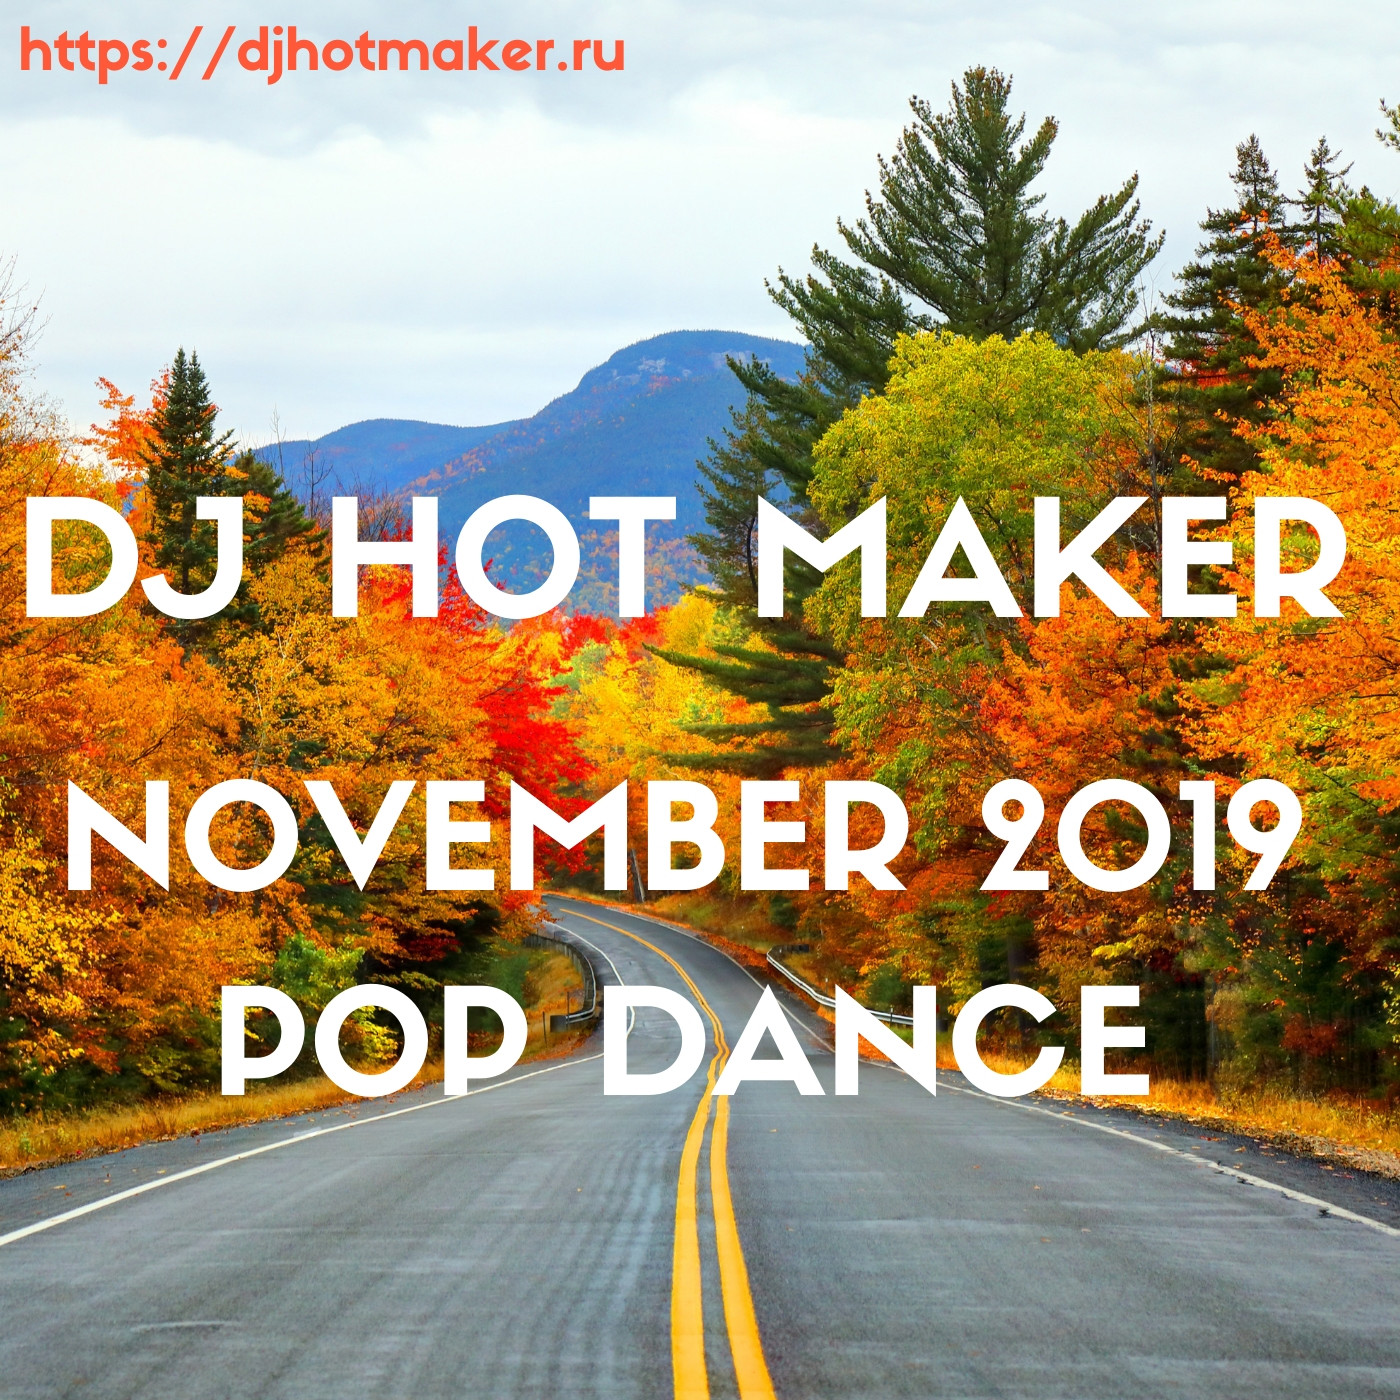 DJ Hot Maker - November 2019 Pop Dance Promo